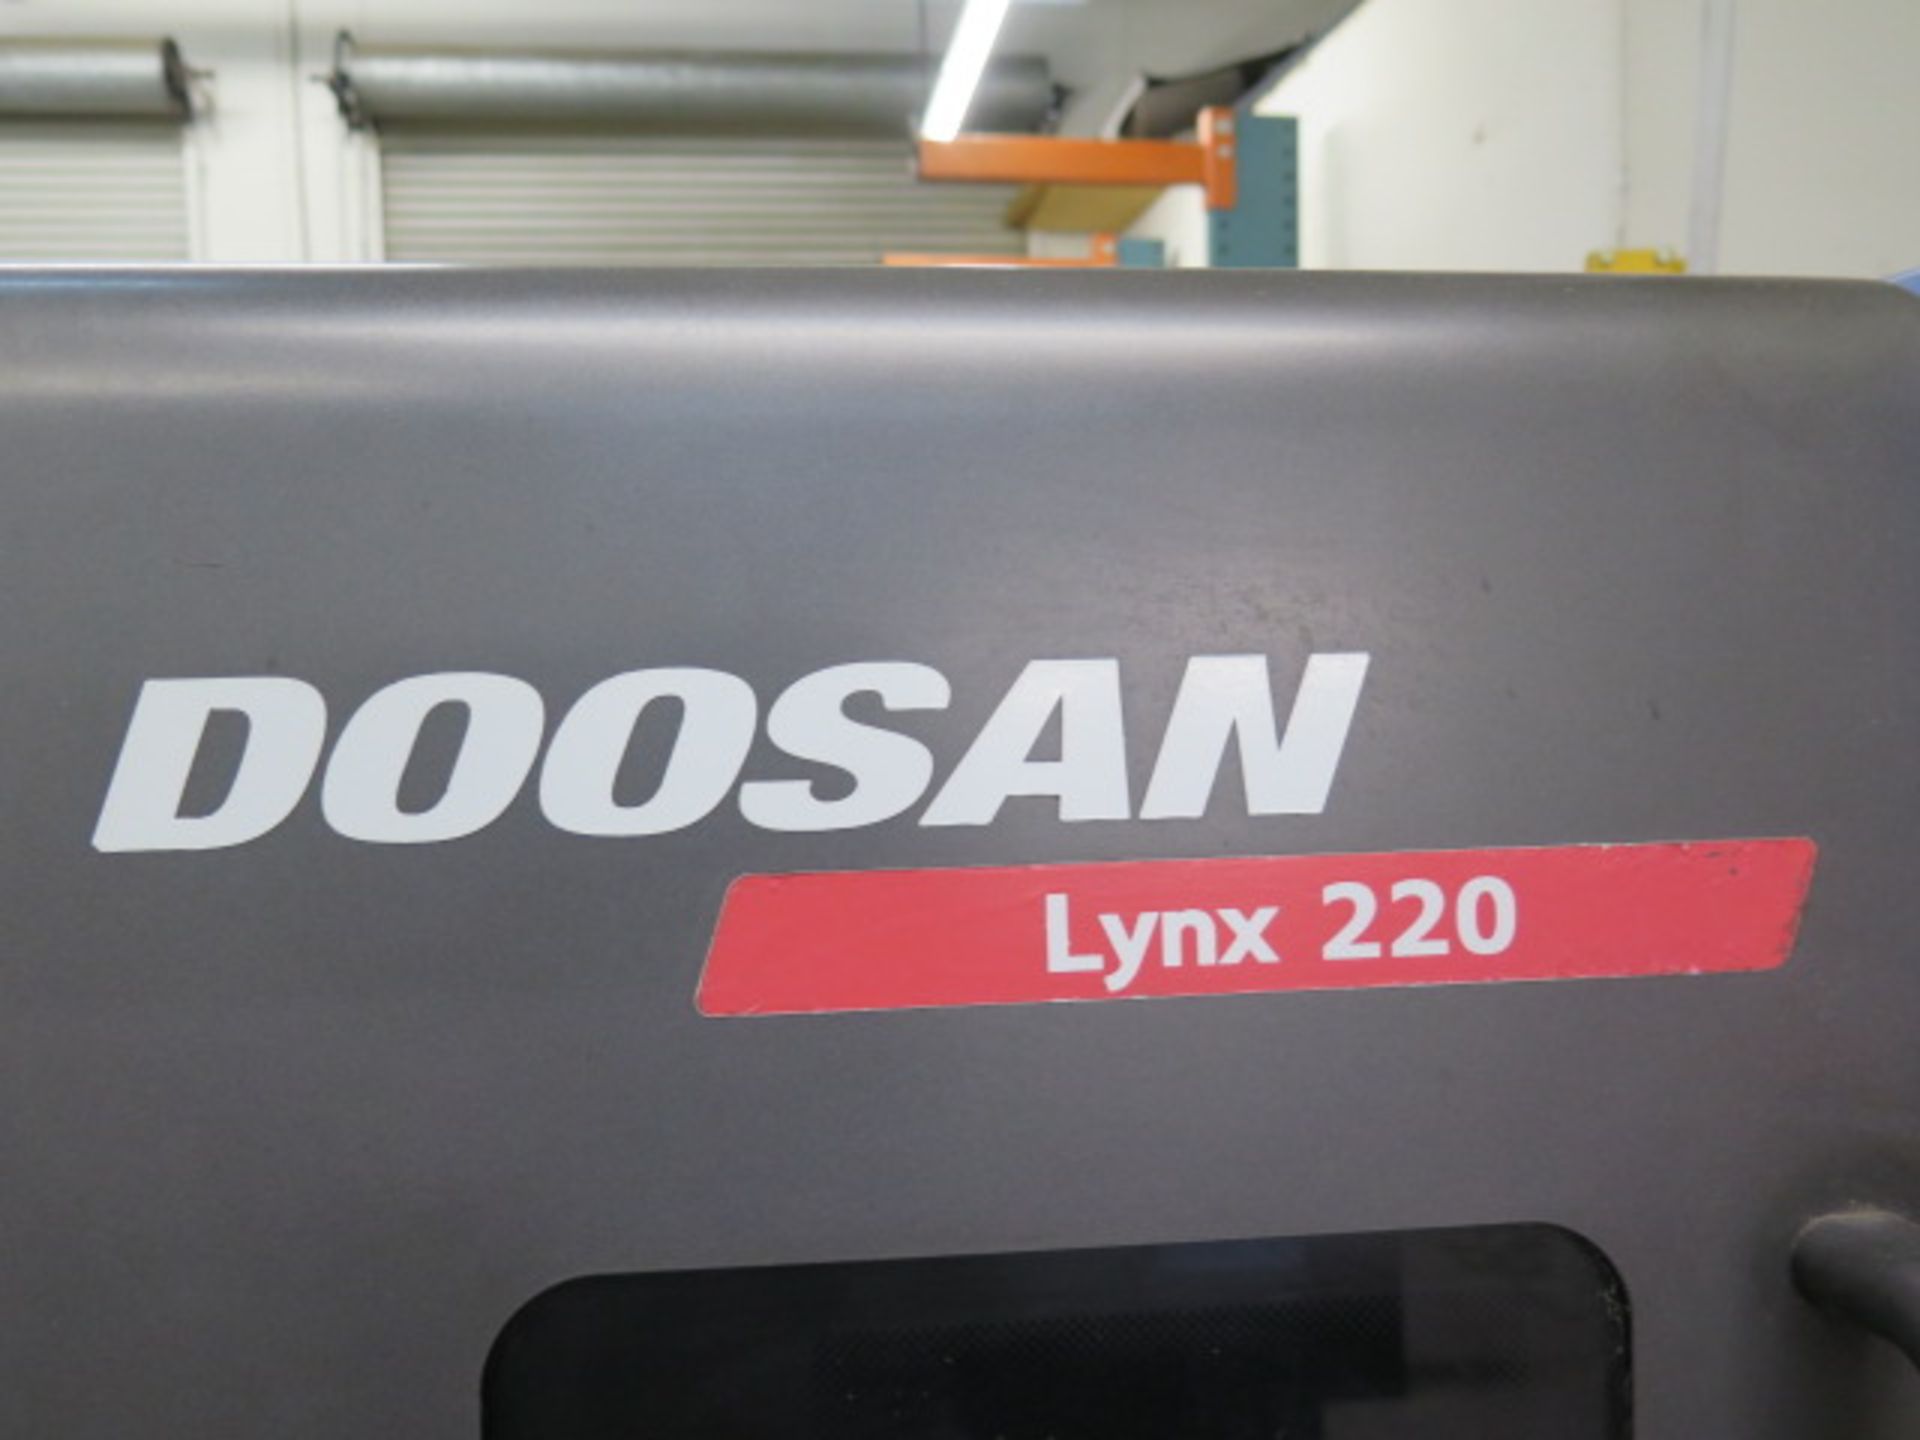 2009 Doosan LYNX 220A CNC Turning Center s/n L2203820 w/ Doosan-Fanuc i Series Controls, SOLD AS IS - Image 12 of 18